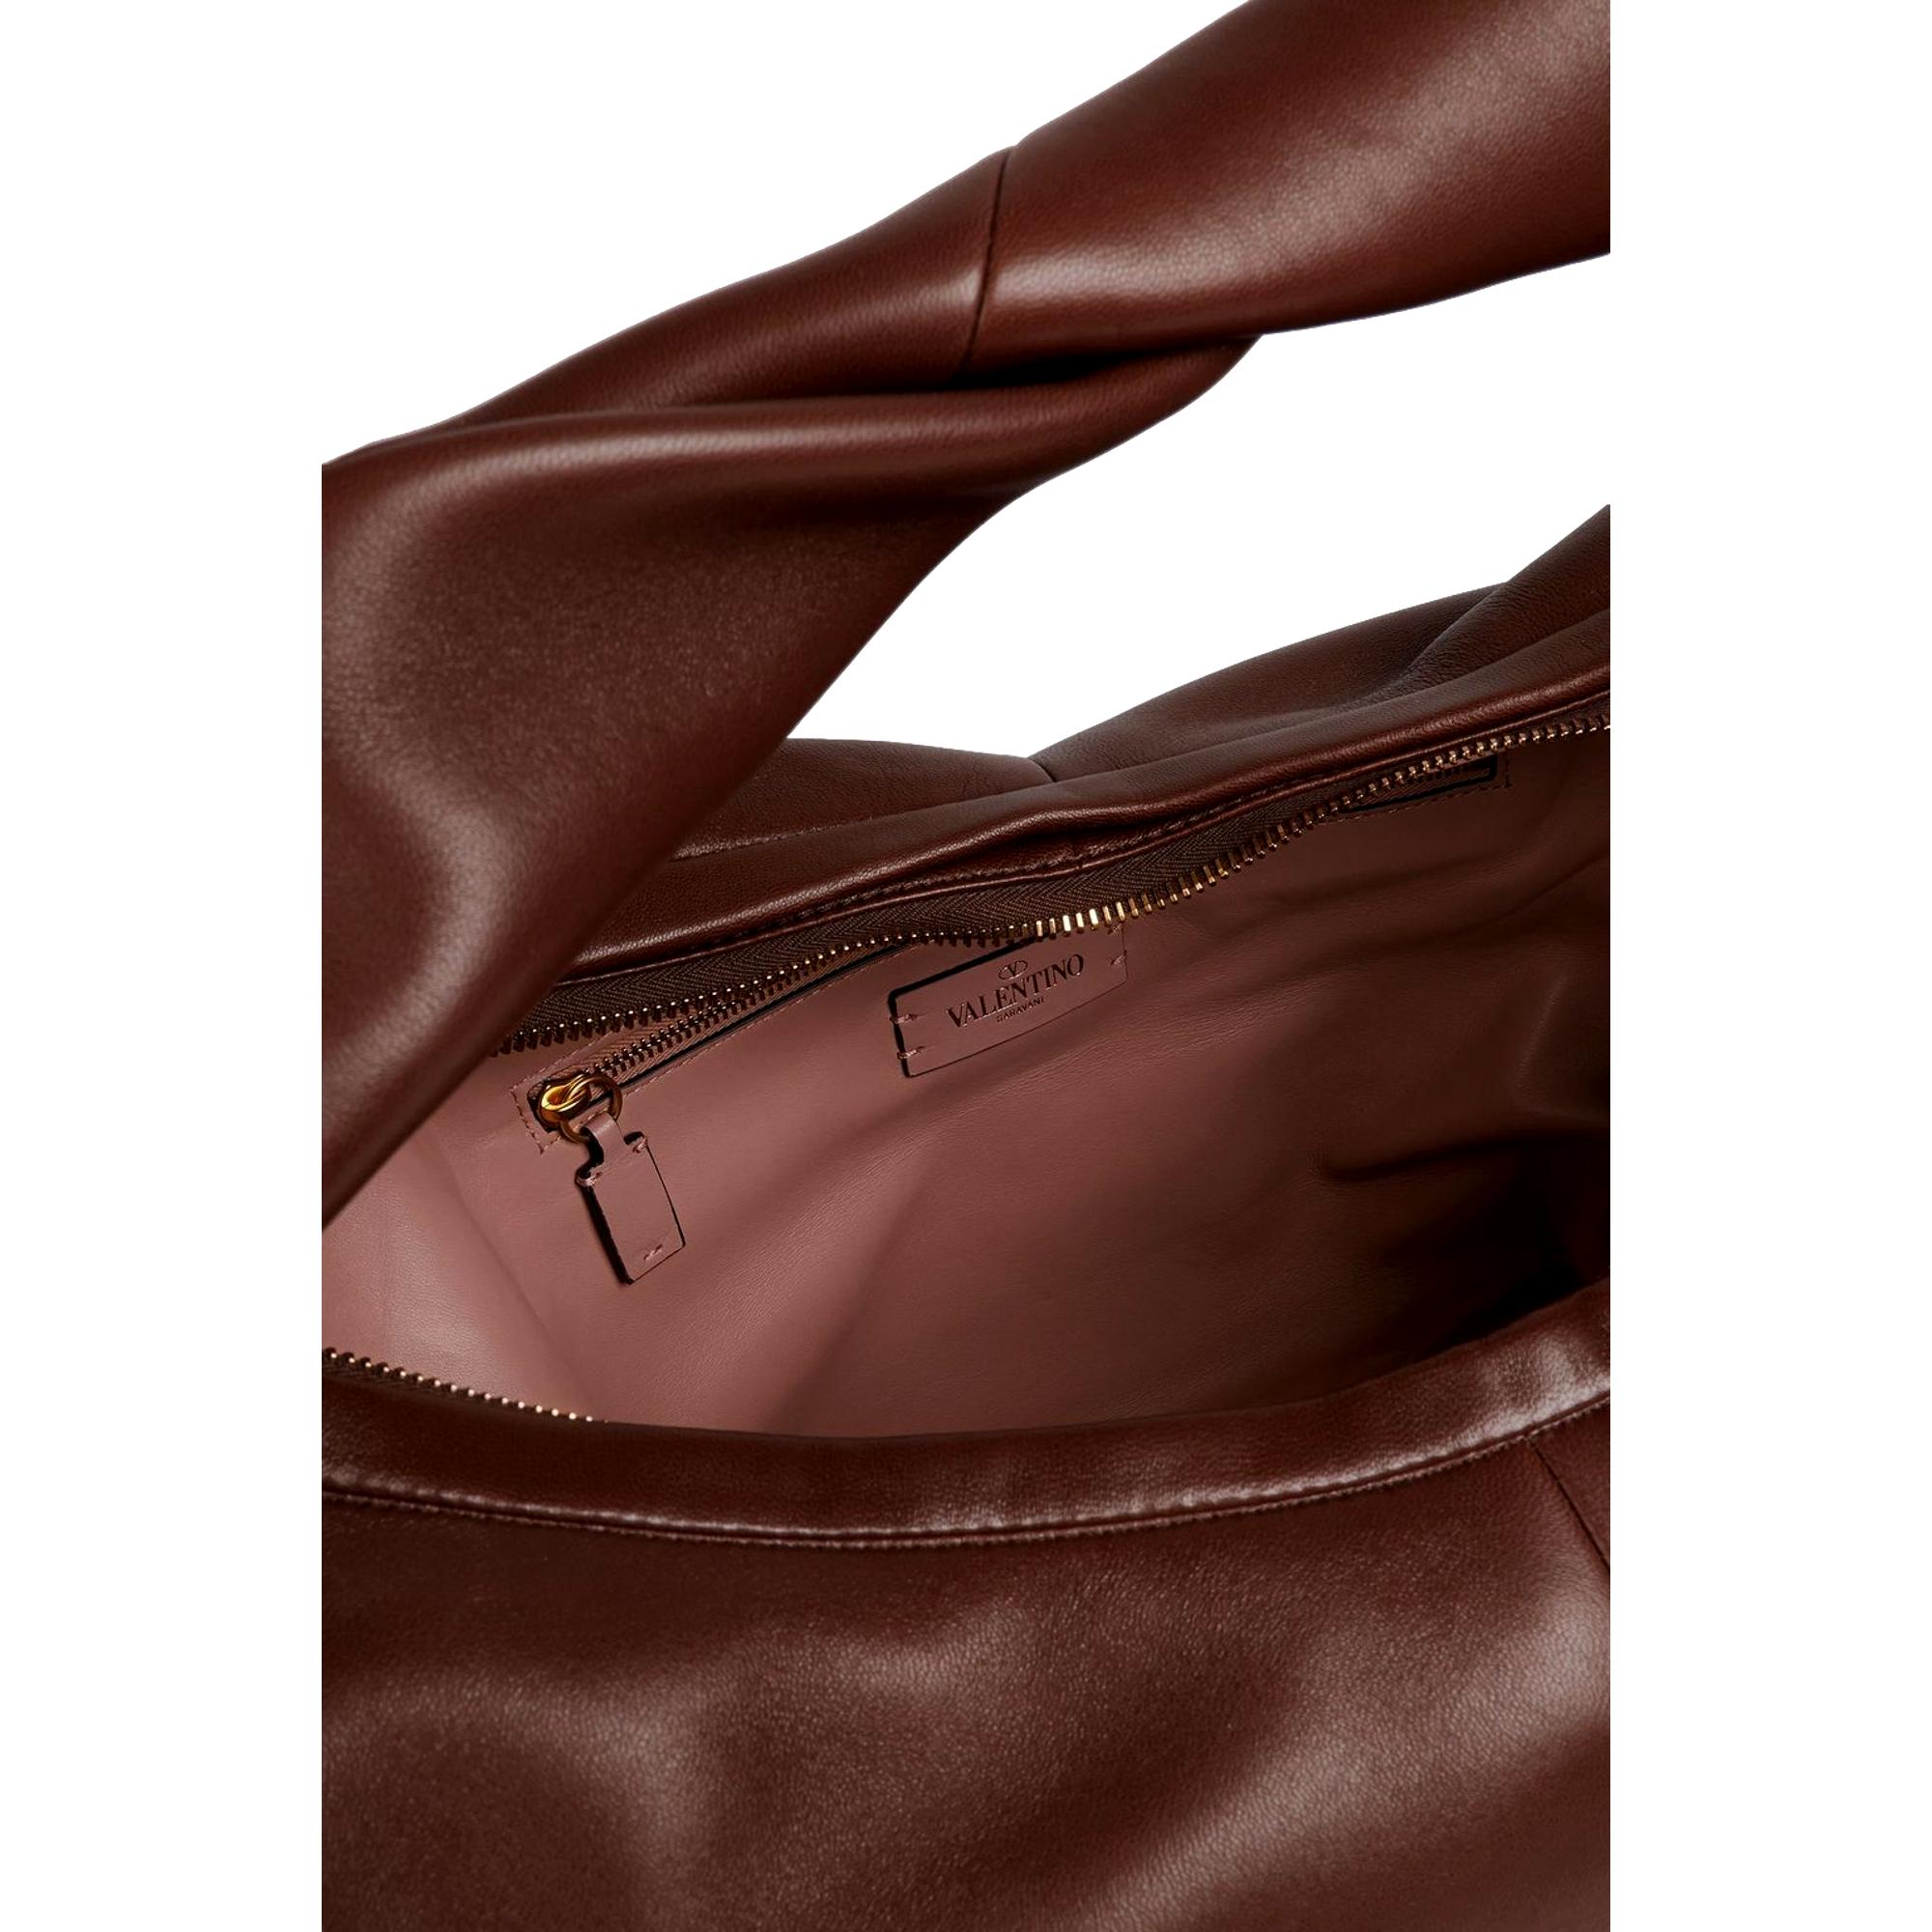 Valentino Garavani Roman Stud Twisted Brown Leather Shoulder Bag